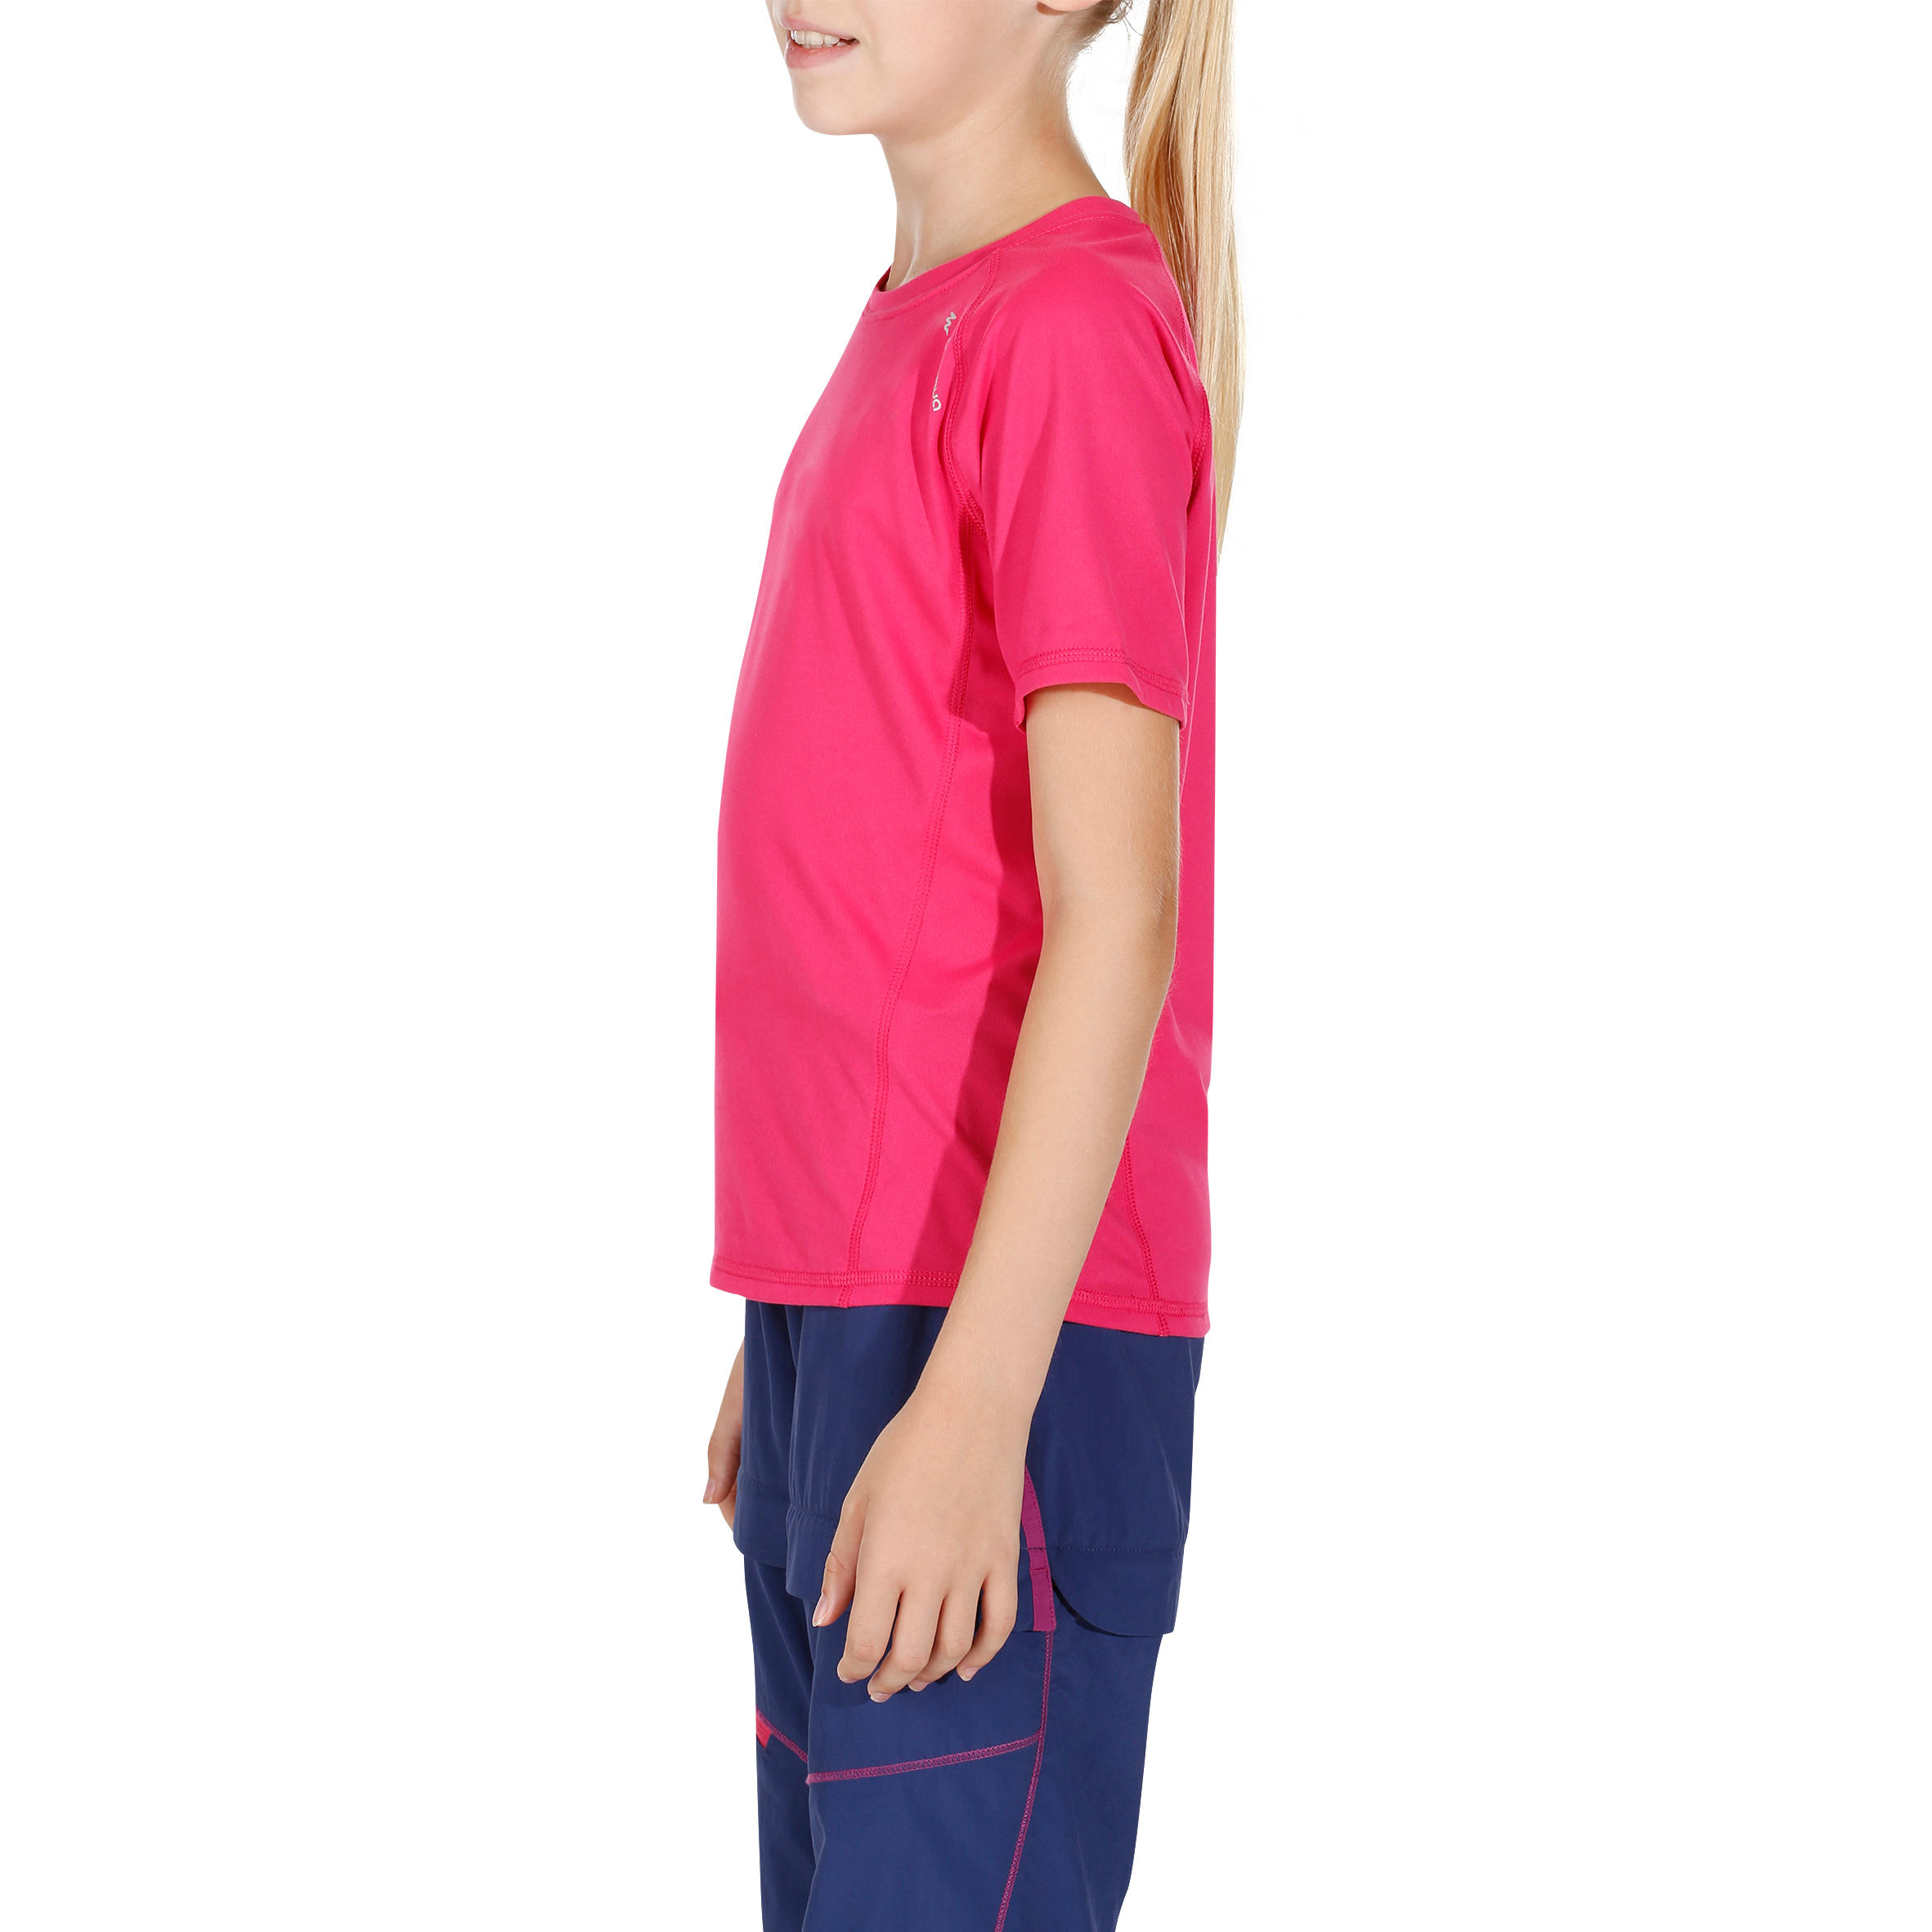 Hike 100 Girl’s Hiking T-Shirt – Pink 5/9